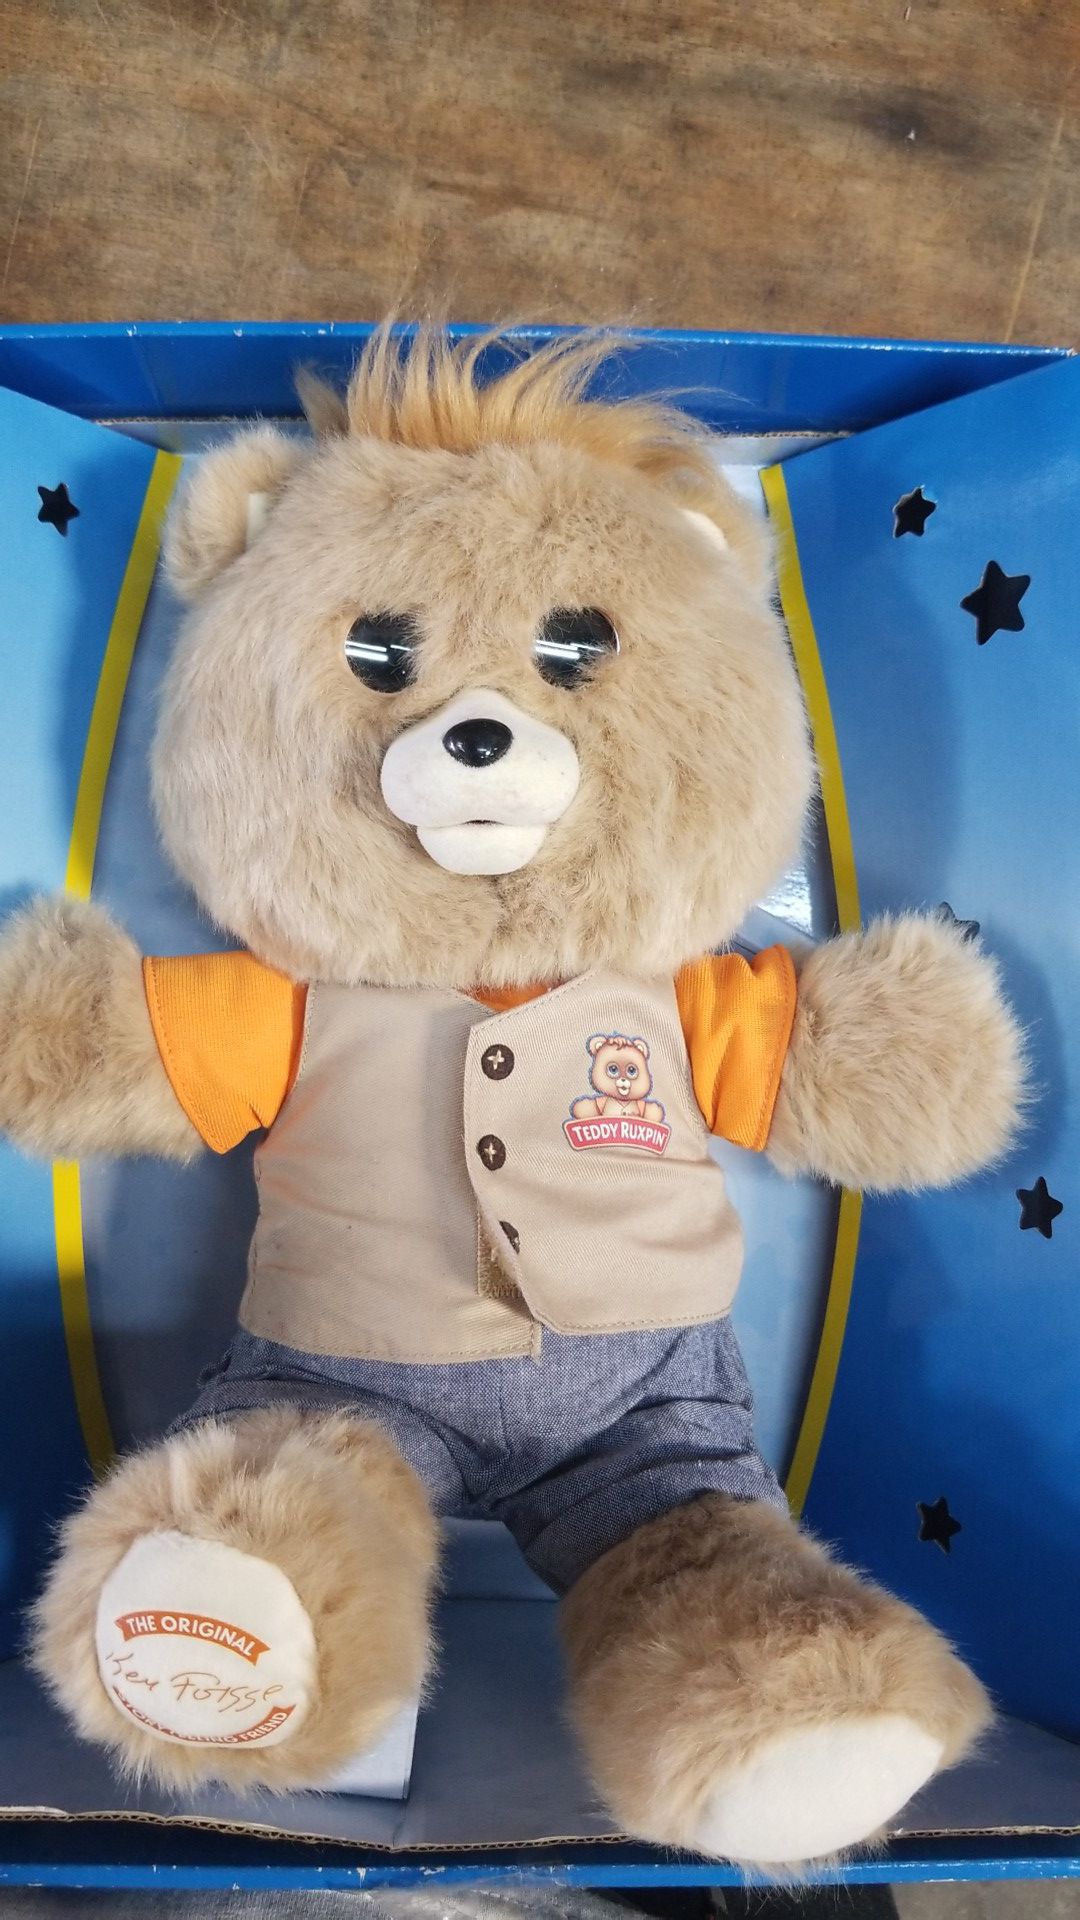 Teddy ruxpin storytelling bear